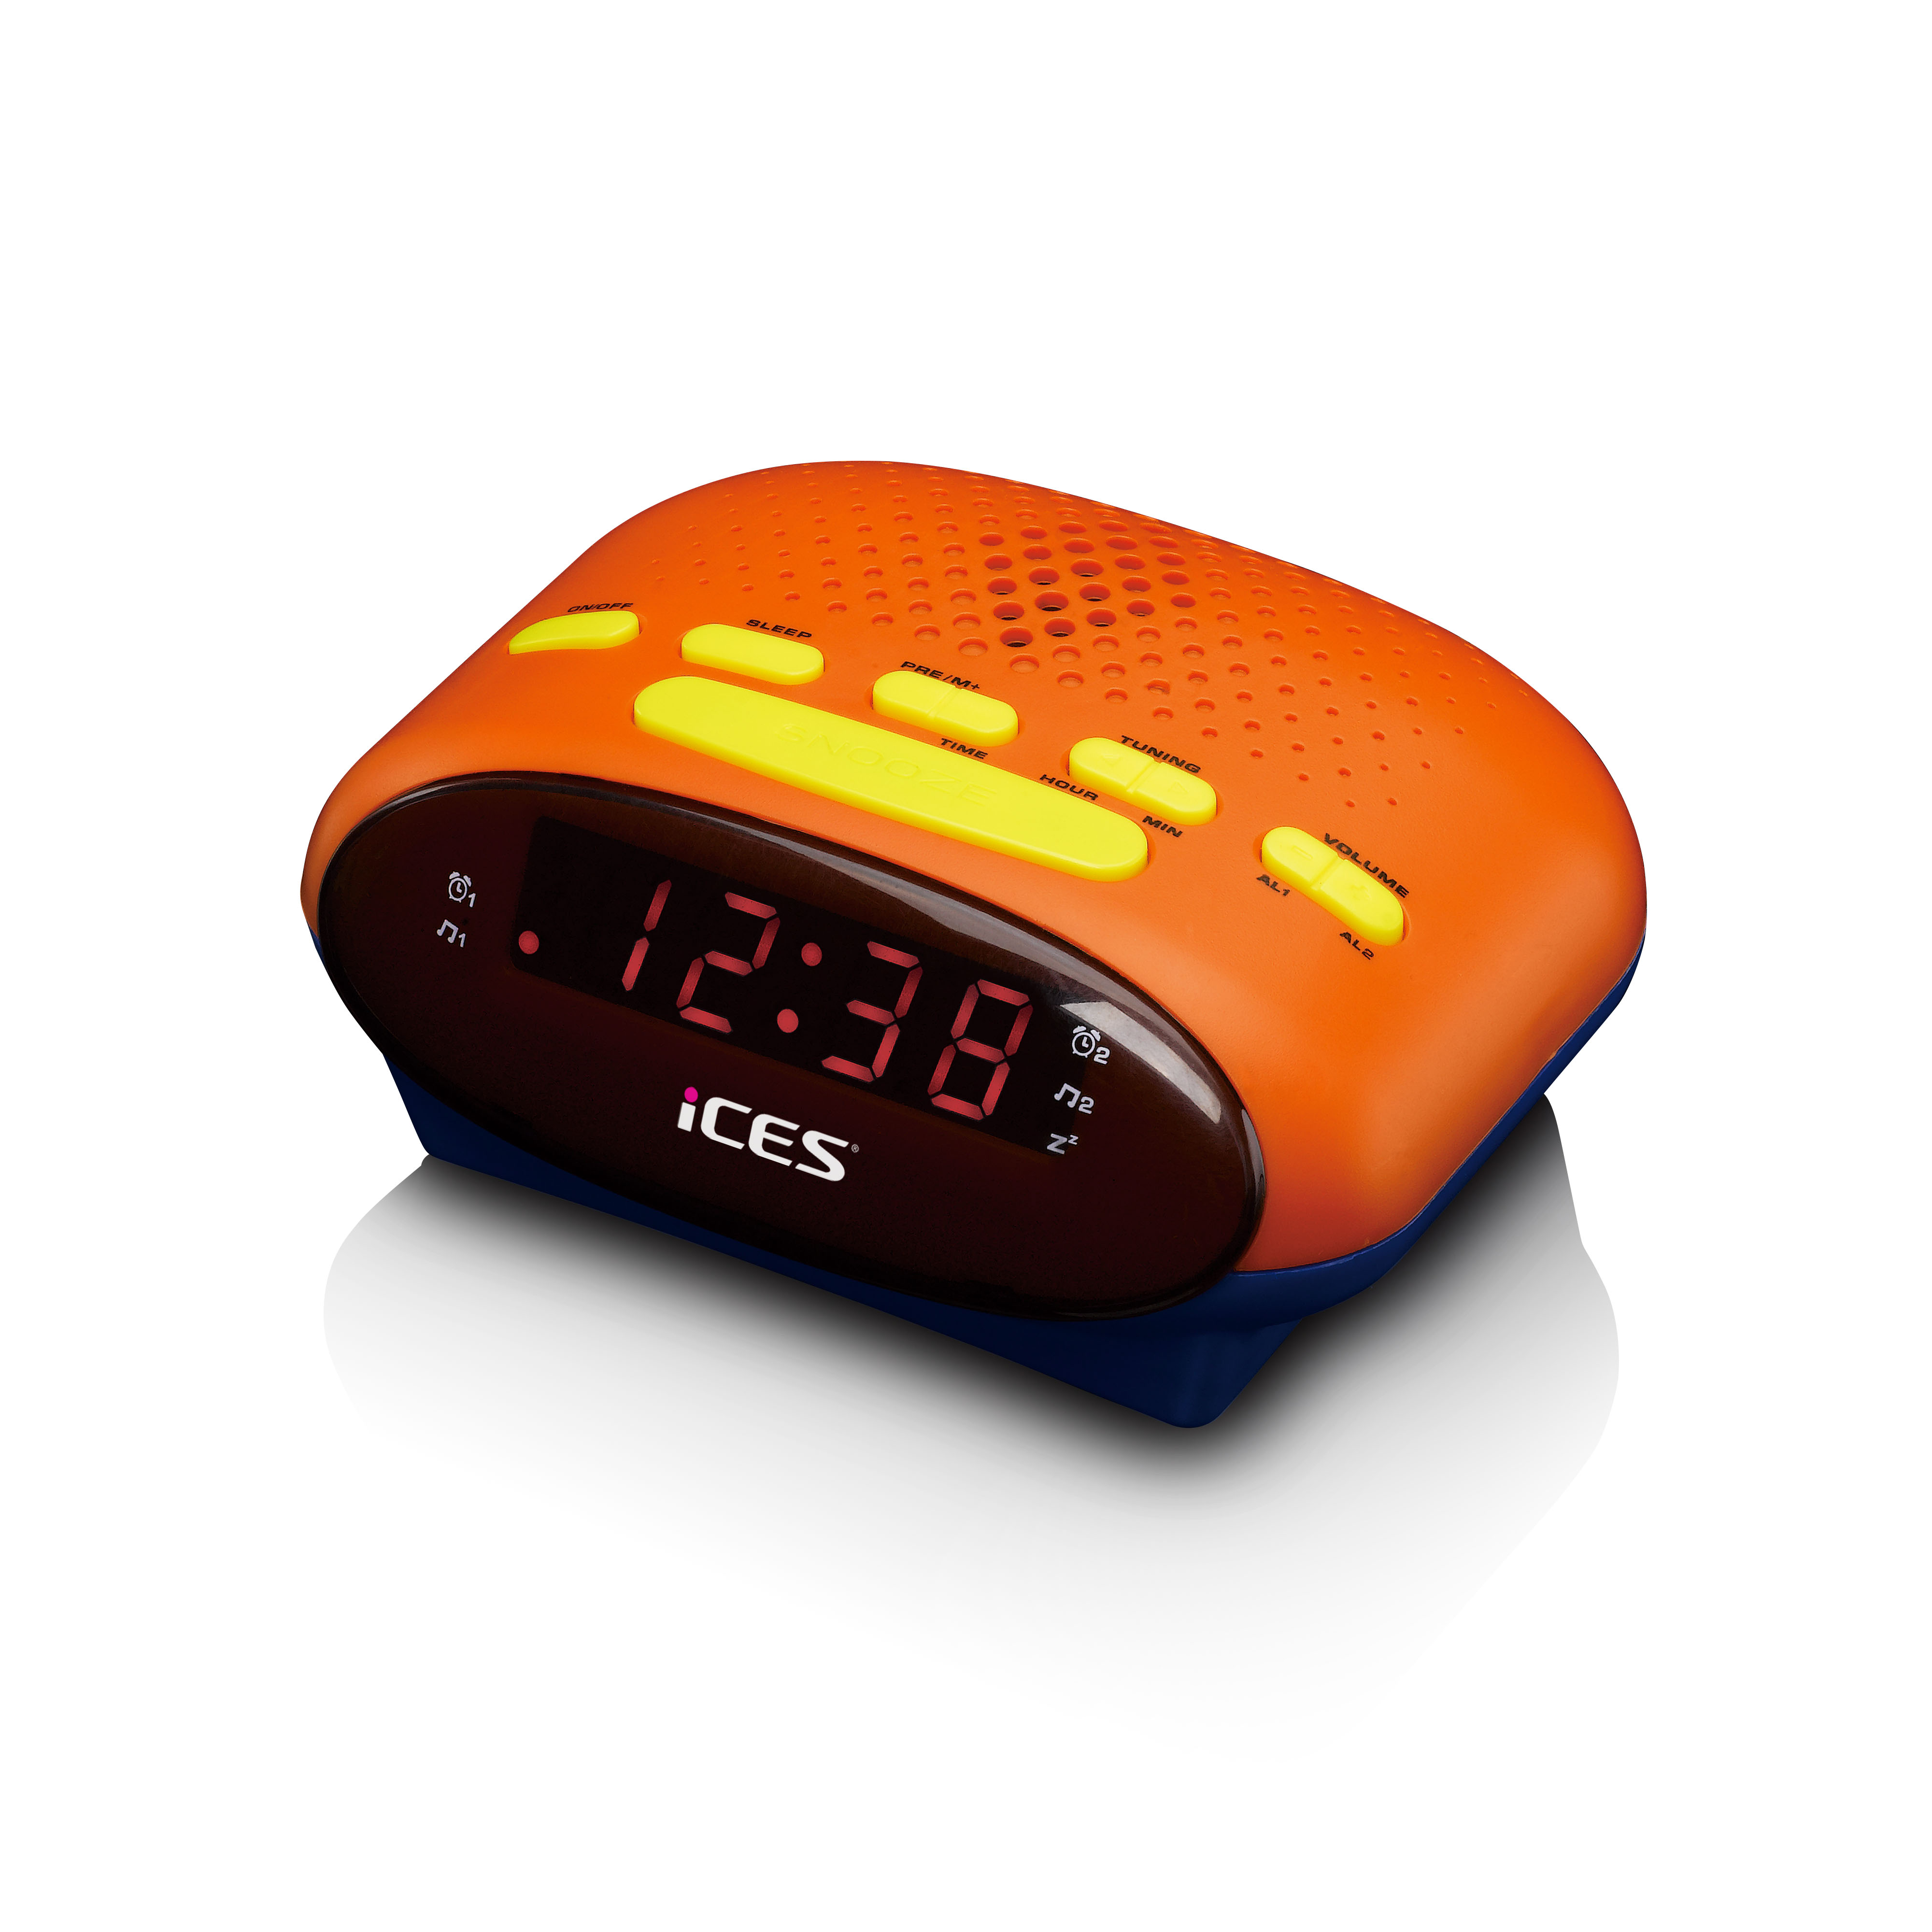 ICES ICR-210 KIDS FM, Radio, Mehrfarbig